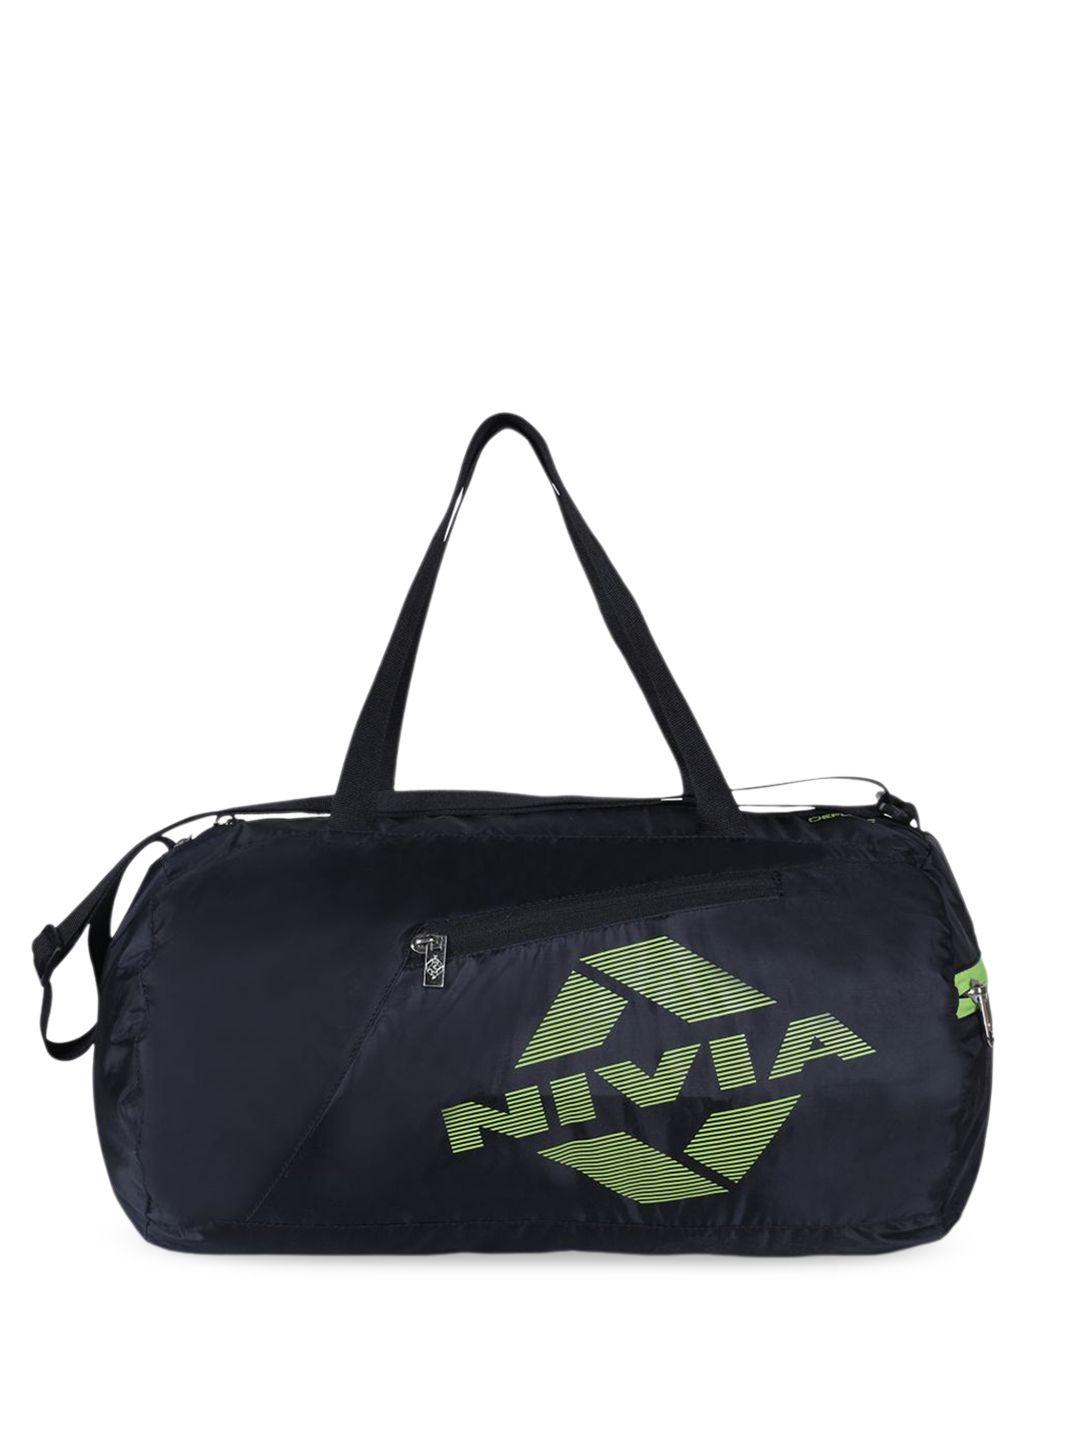 nivia printed shoulder straps foldable sports duffel bag